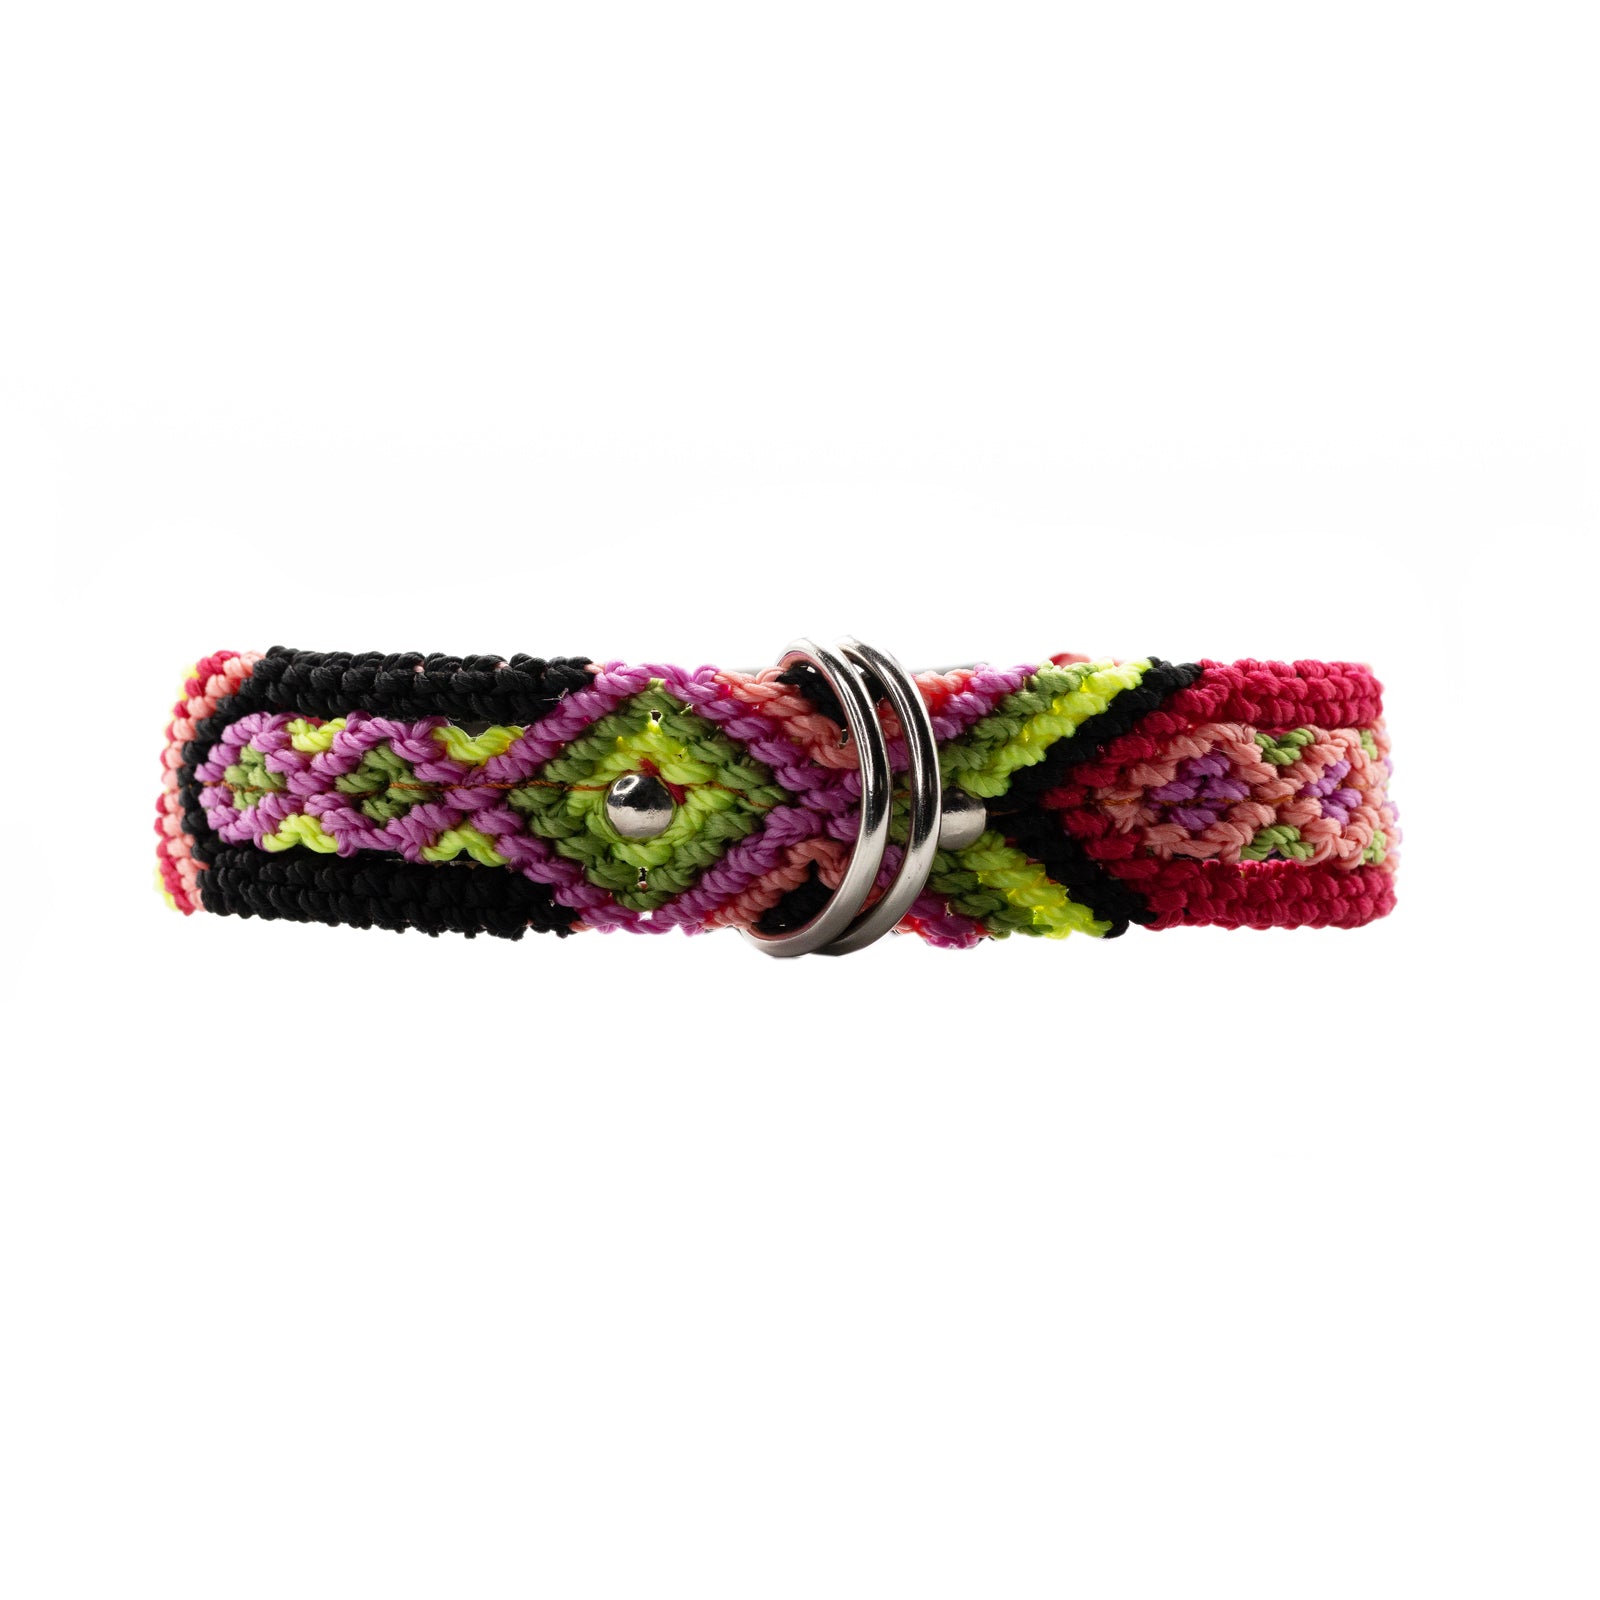 Artisan-made dog collar featuring intricate handwoven details